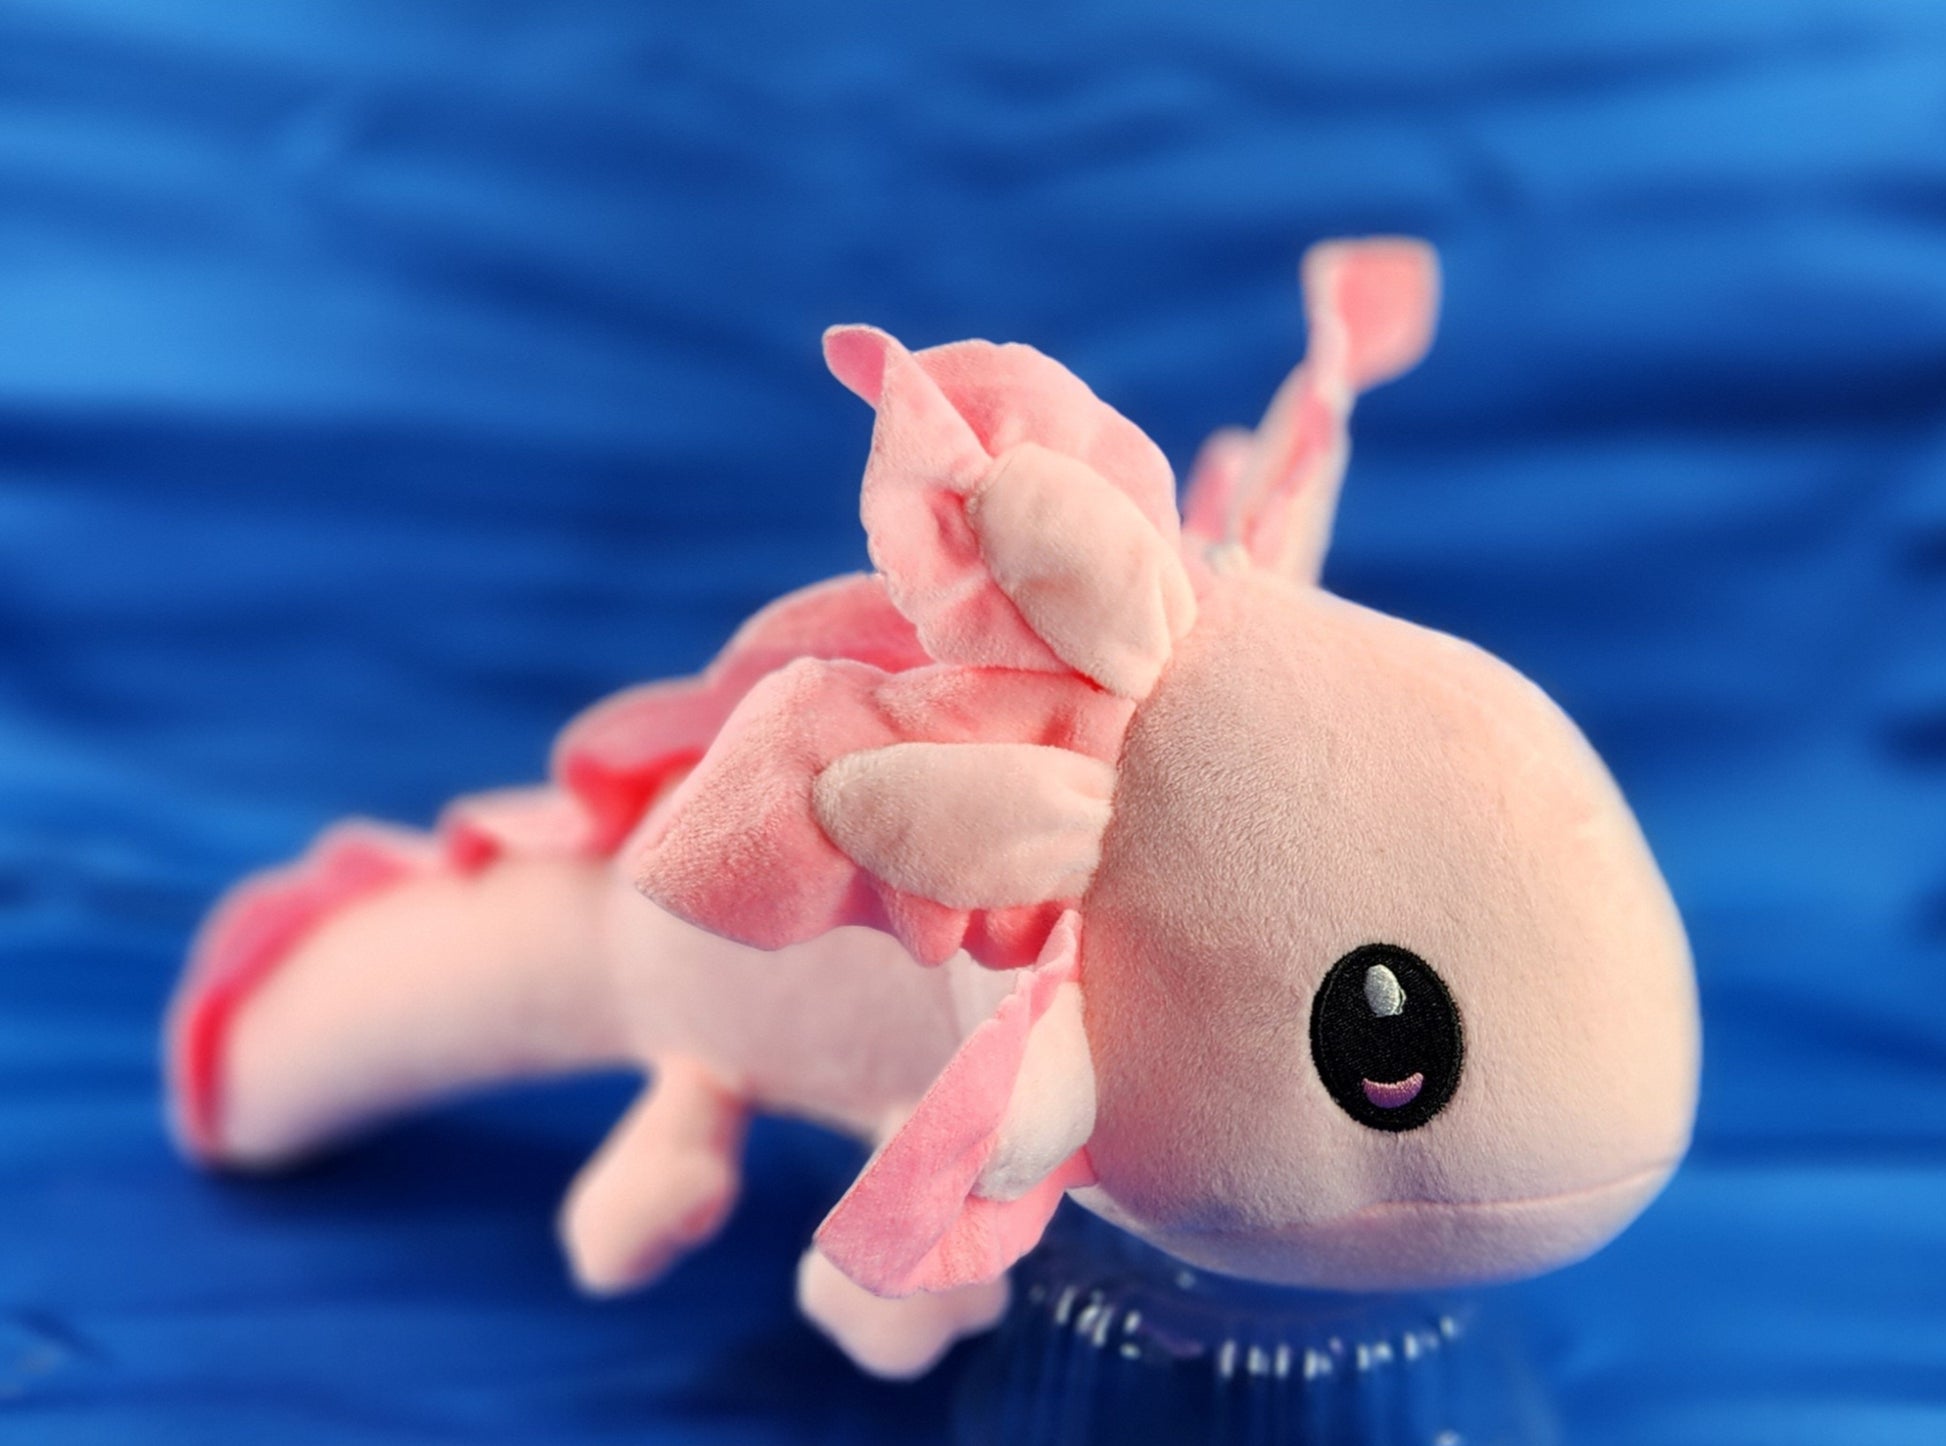 Axolotl Plush - Wiggle & Ding